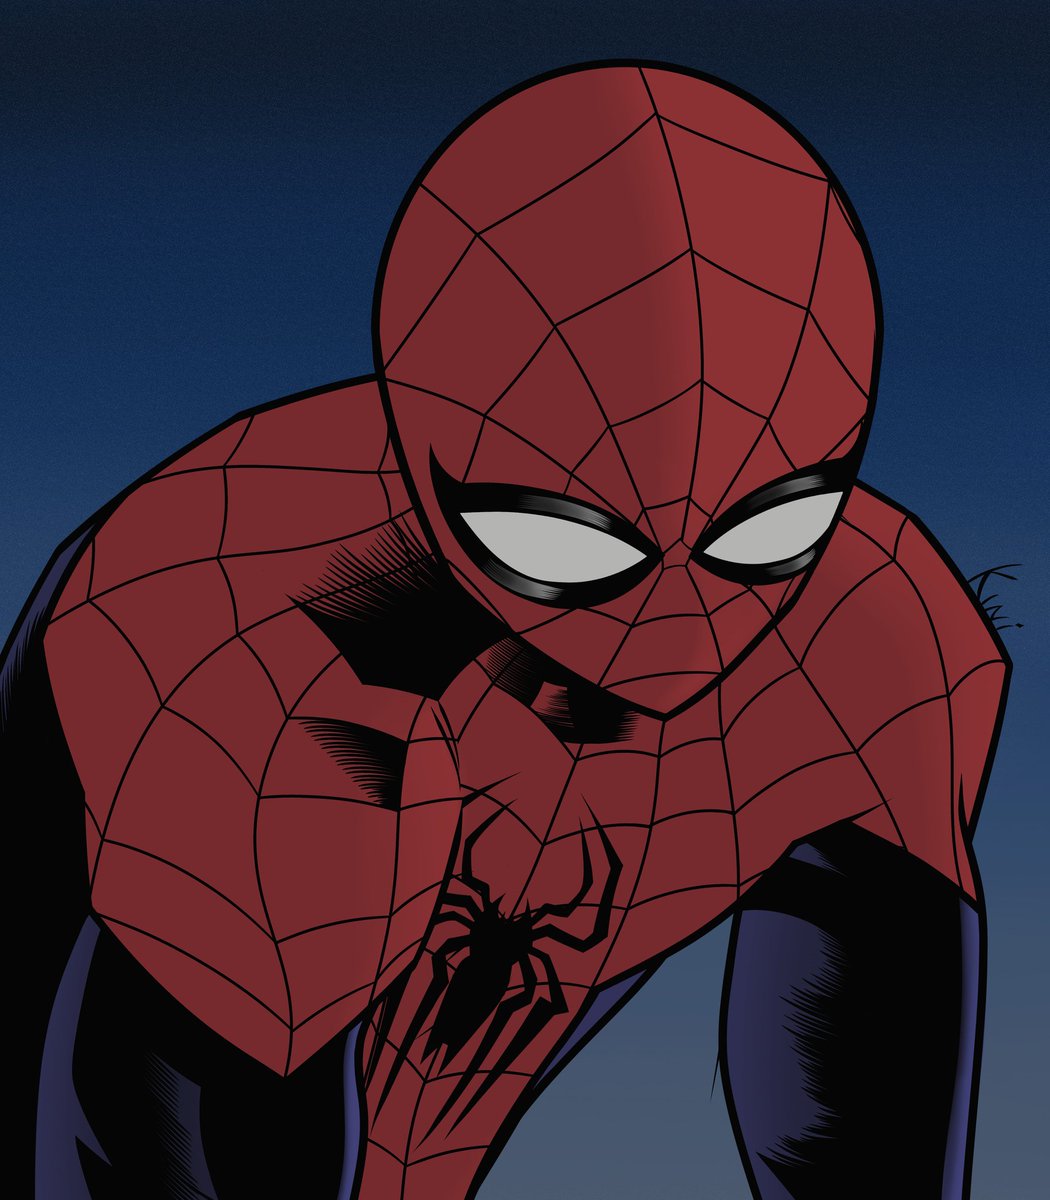 The Amazing Spider-Man.
#Redraw #digitalart #SpiderMan #coloring #Comics #MarvelComics